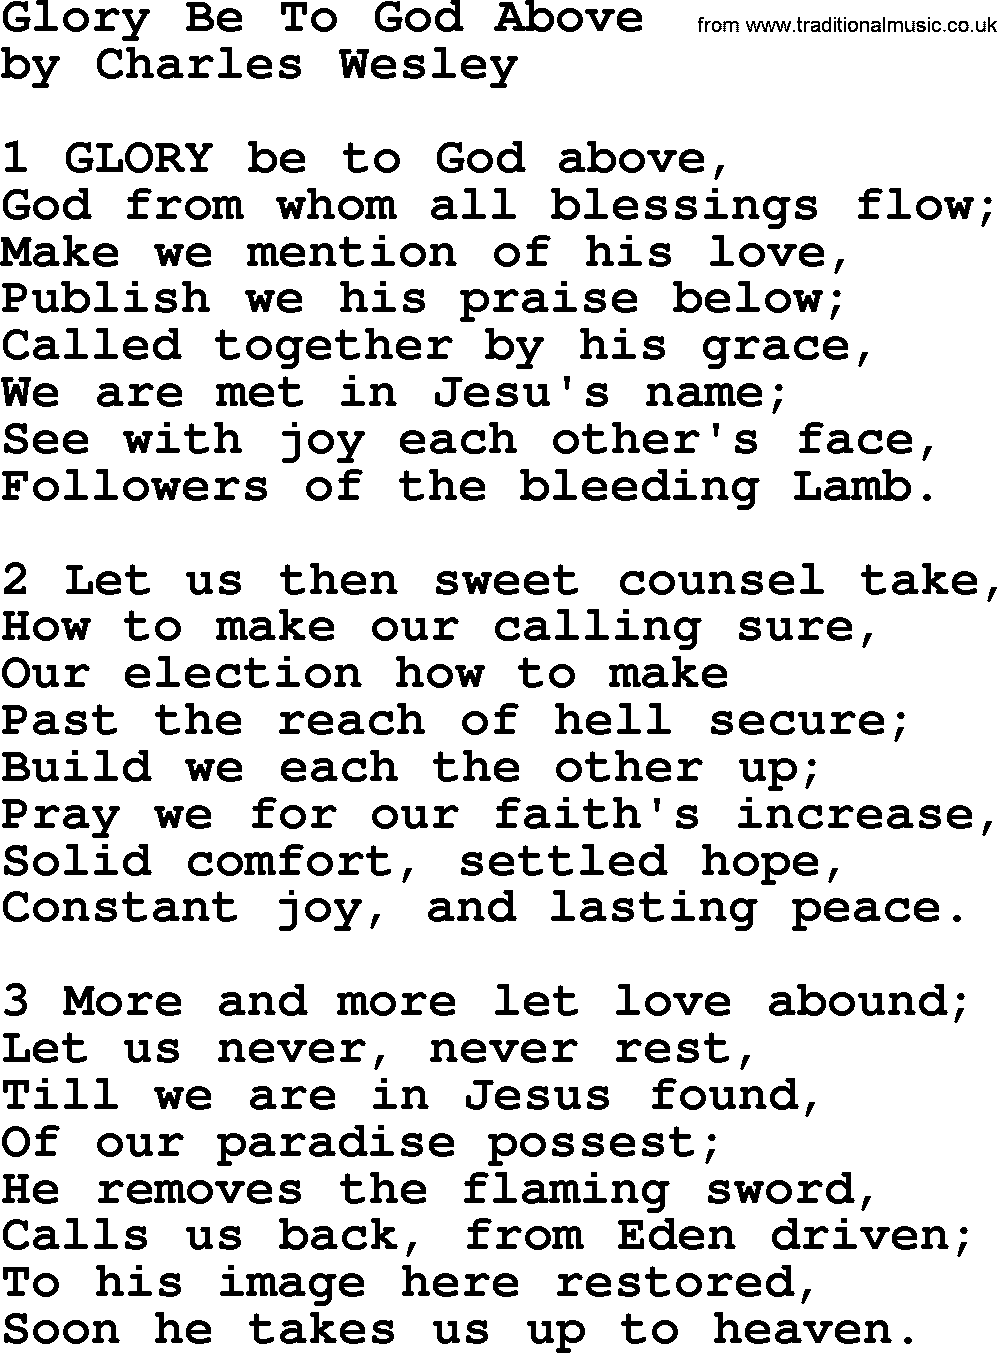 Charles Wesley hymn: Glory Be To God Above, lyrics